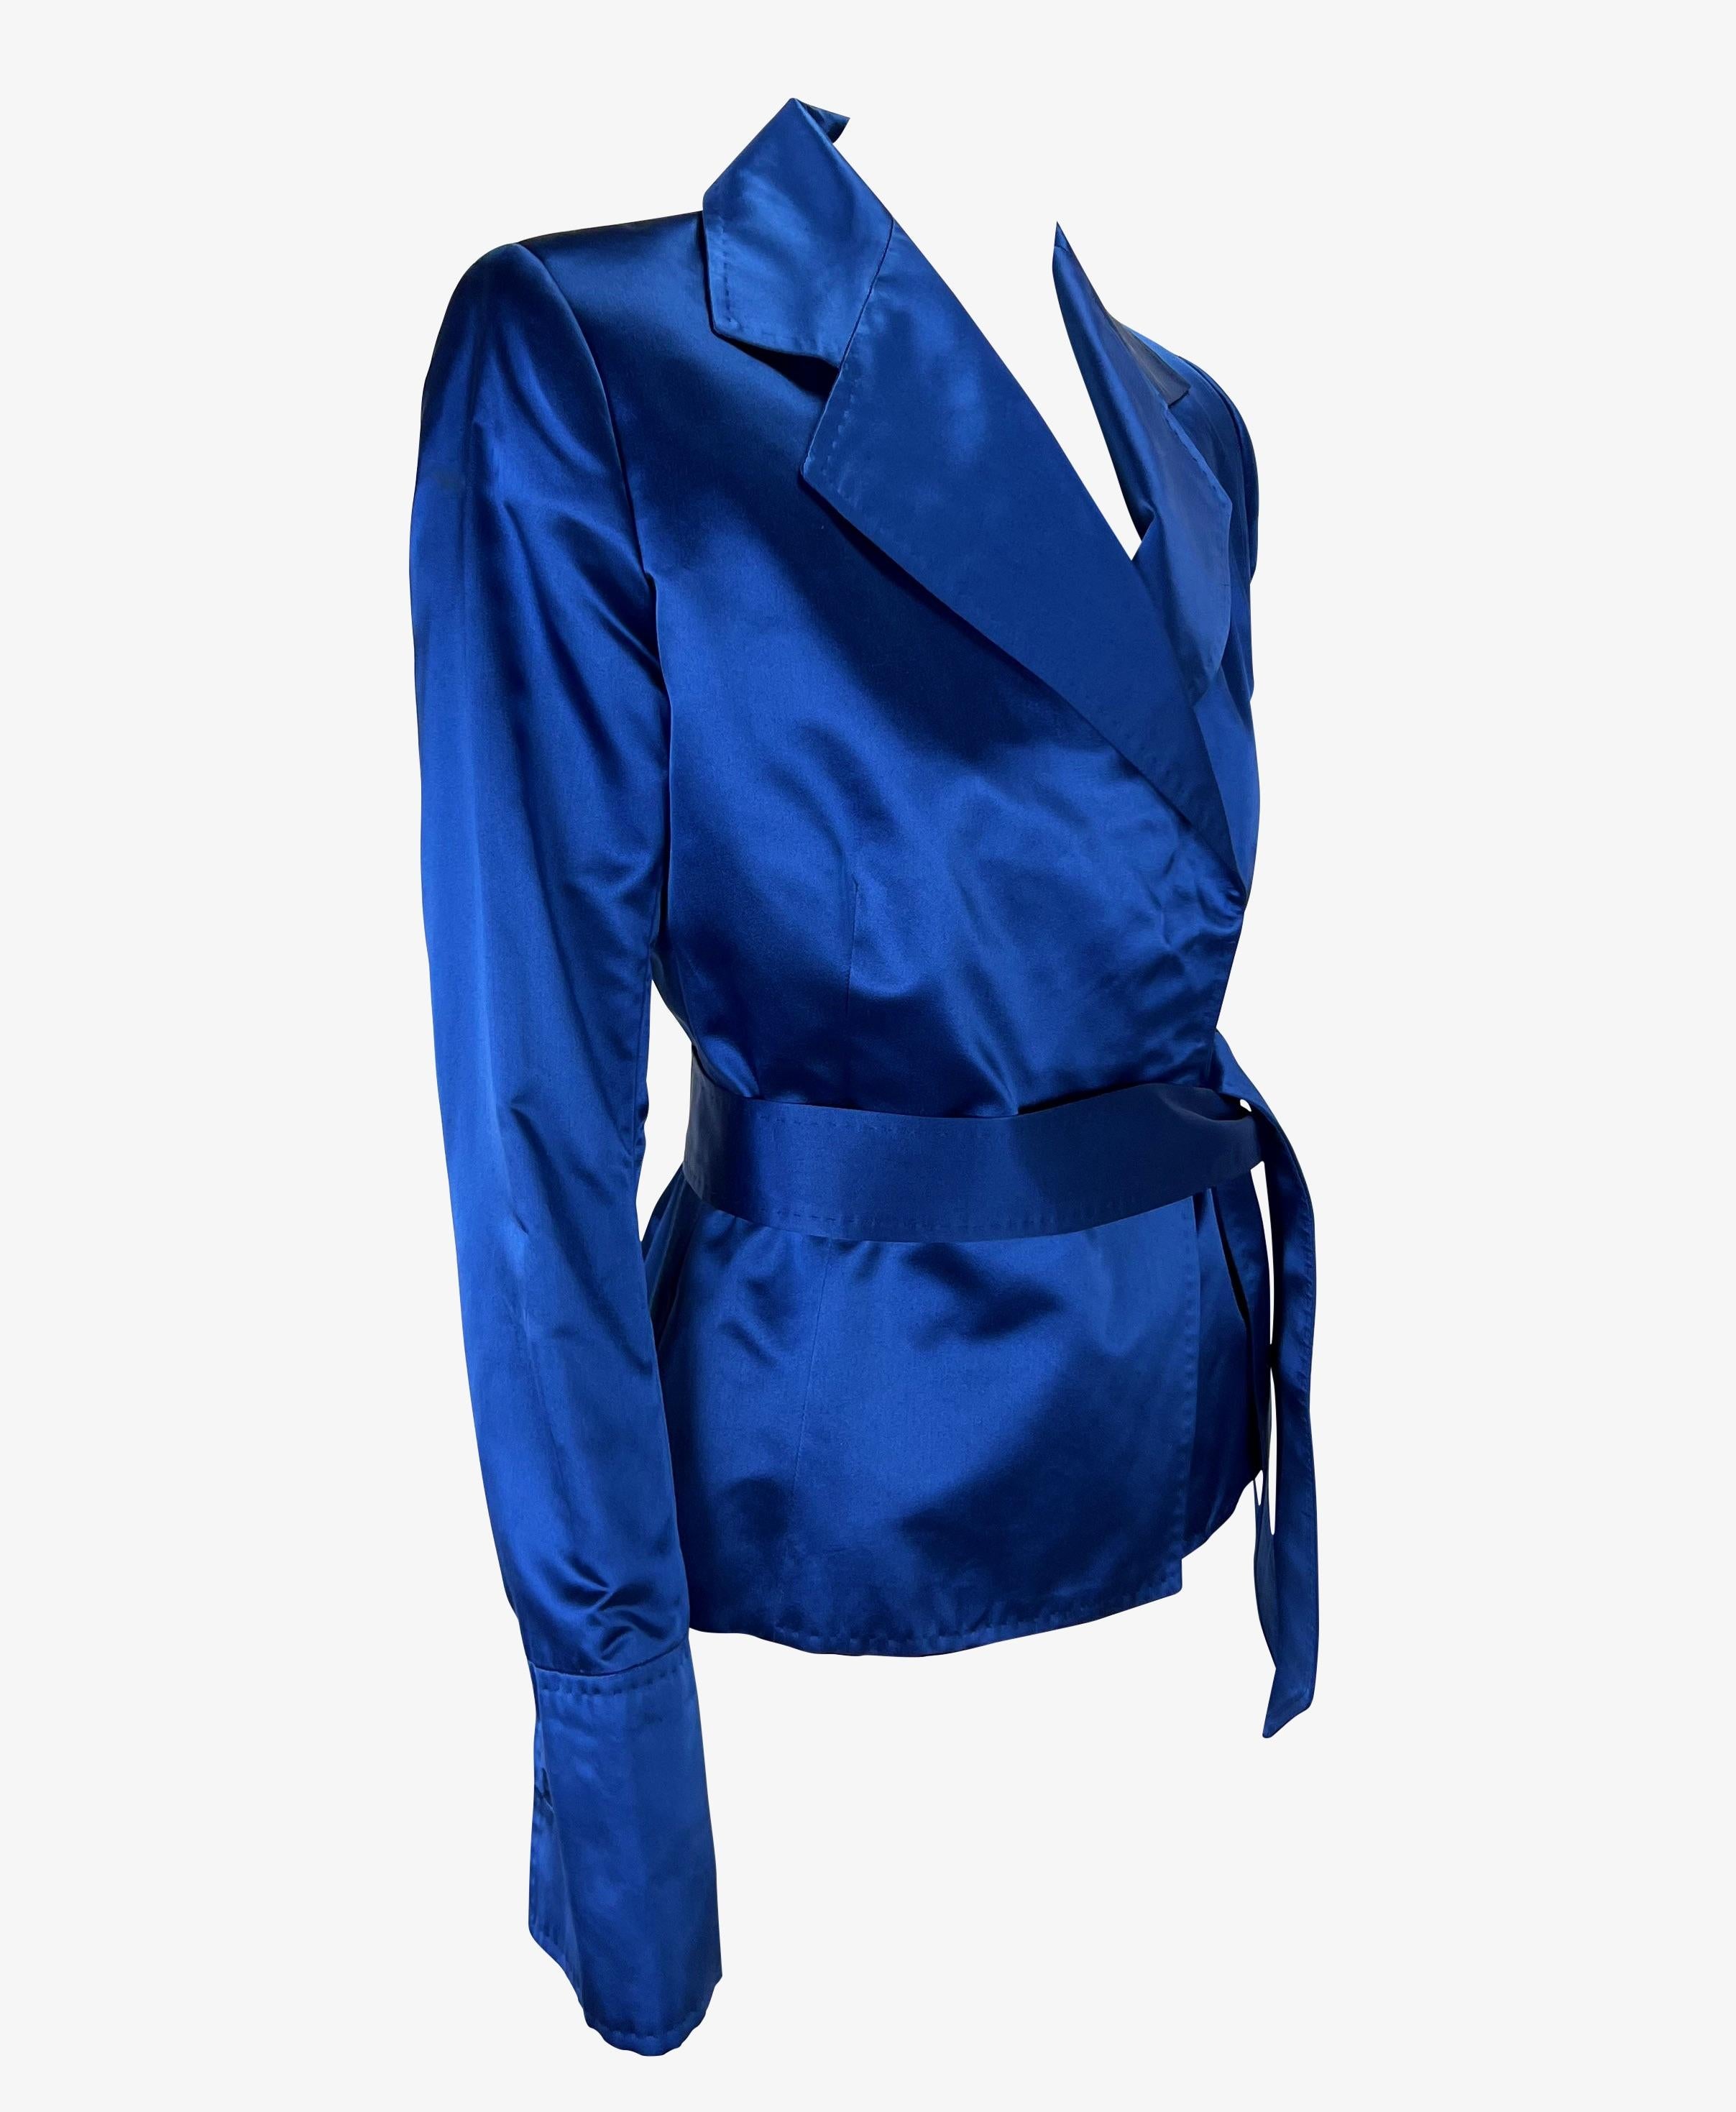 S/S 2001 Dolce & Gabbana Sex & The City Runway Blue Silk Satin Blazer Jacket For Sale 3